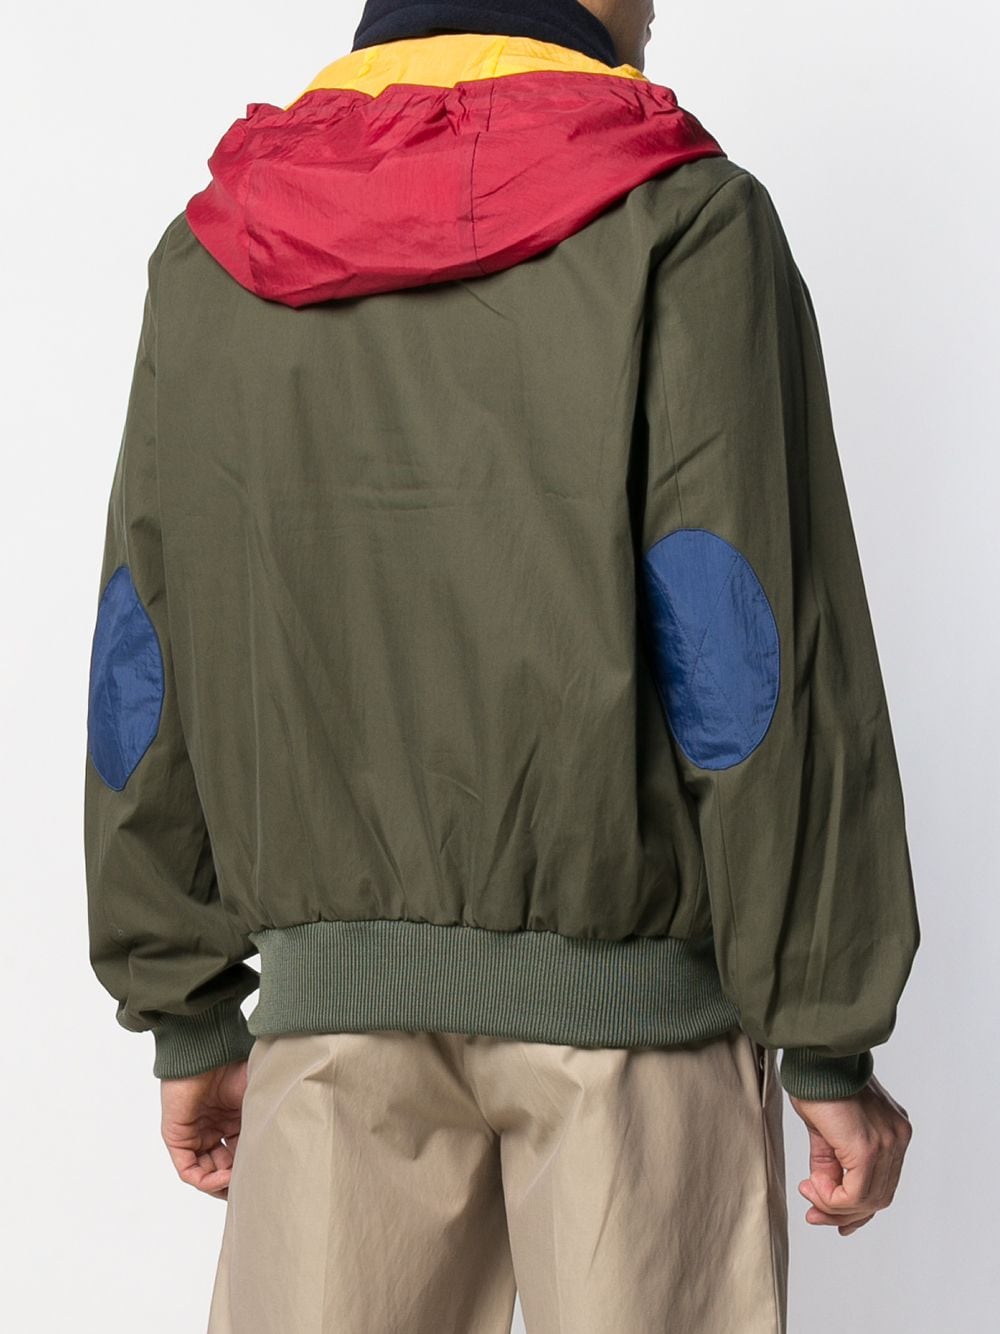 фото Jw anderson куртка на молнии с воротником-воронкой